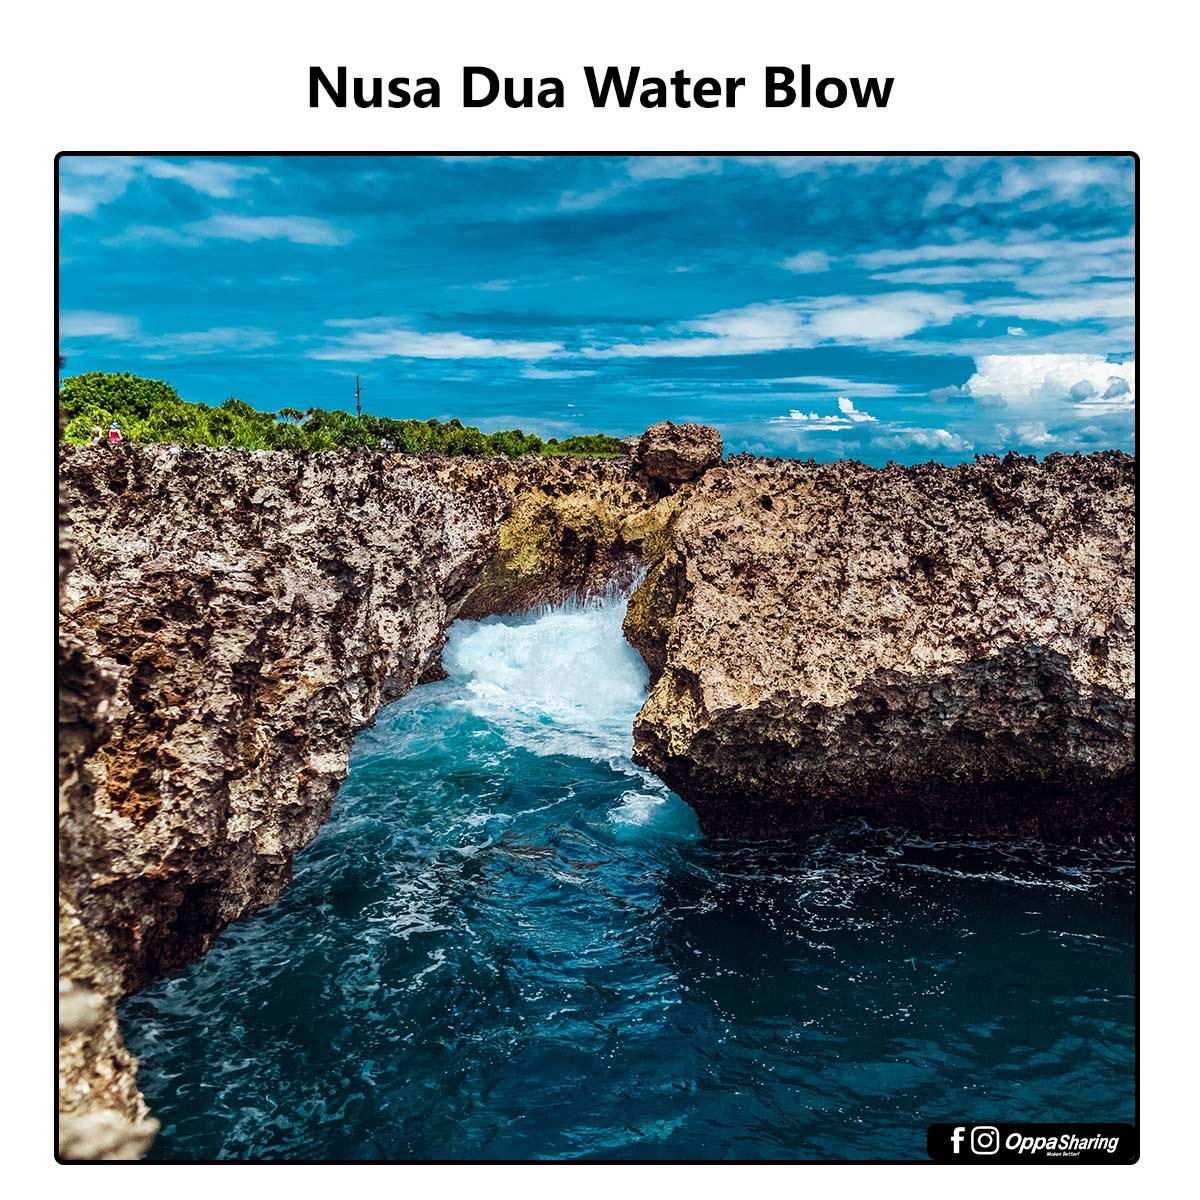 Nusa Dua Water Blow